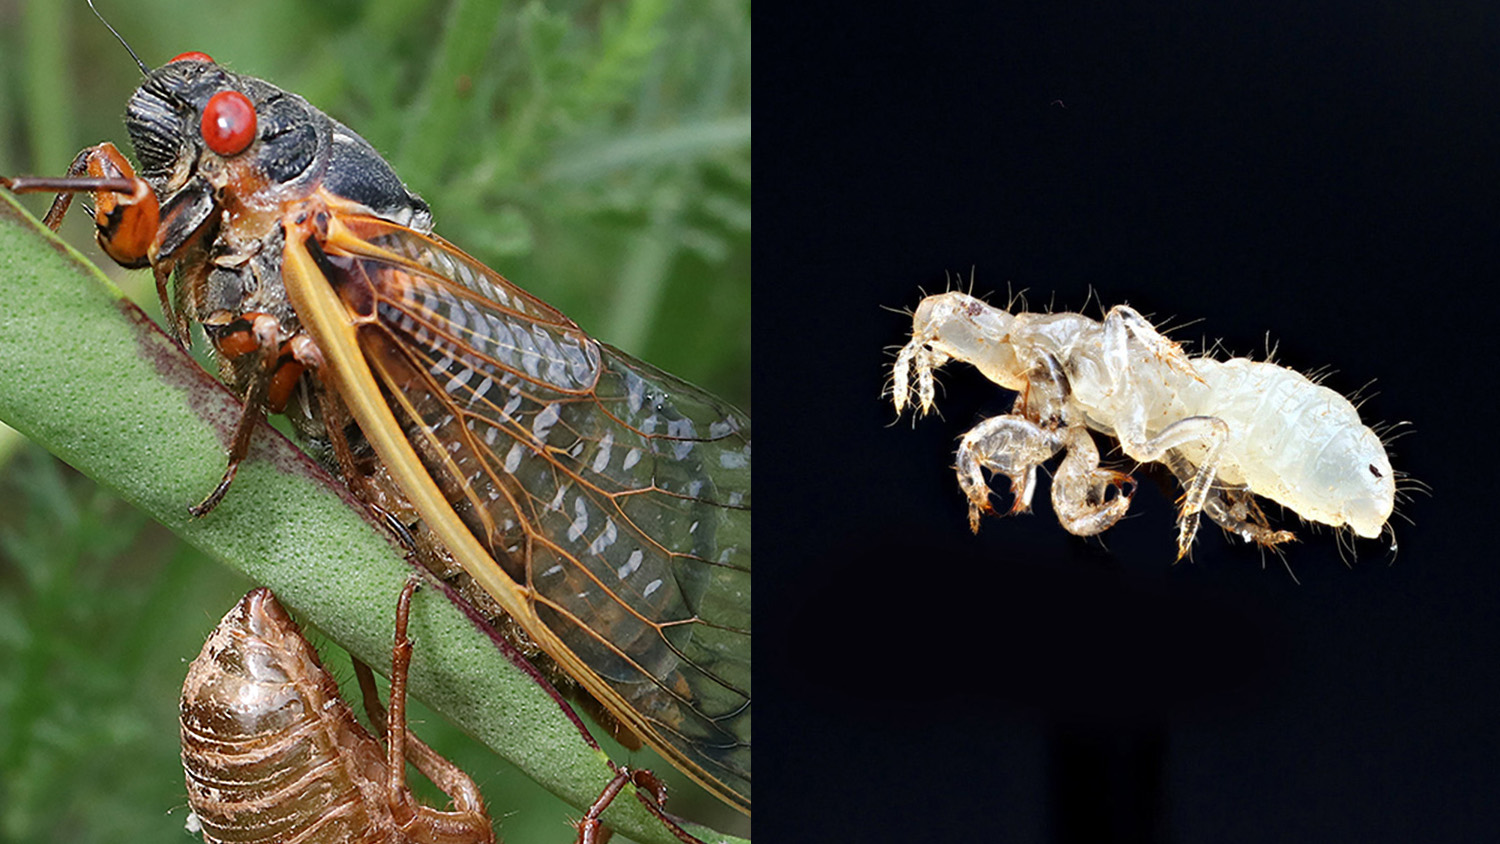 adult periodical cicada and periodical cicada nymph